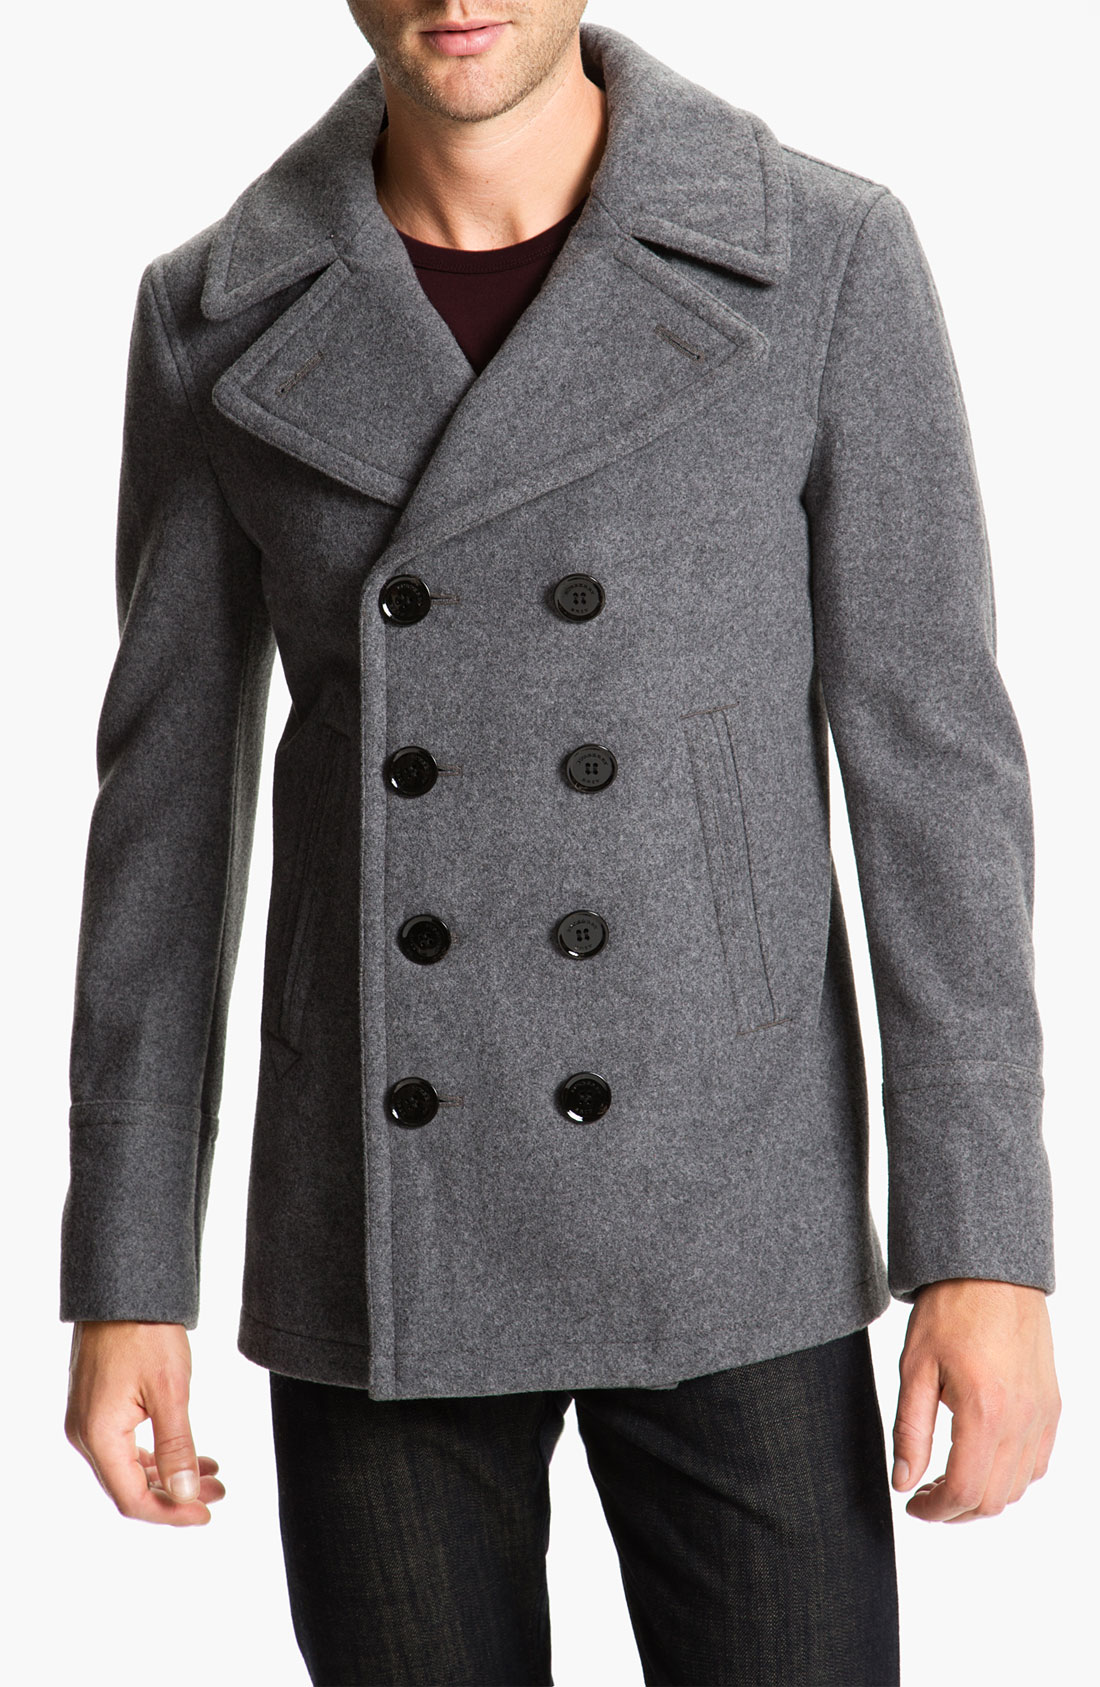 Lyst - Burberry Double Splittable Wool Blend Duffle Coat in Gray for Men